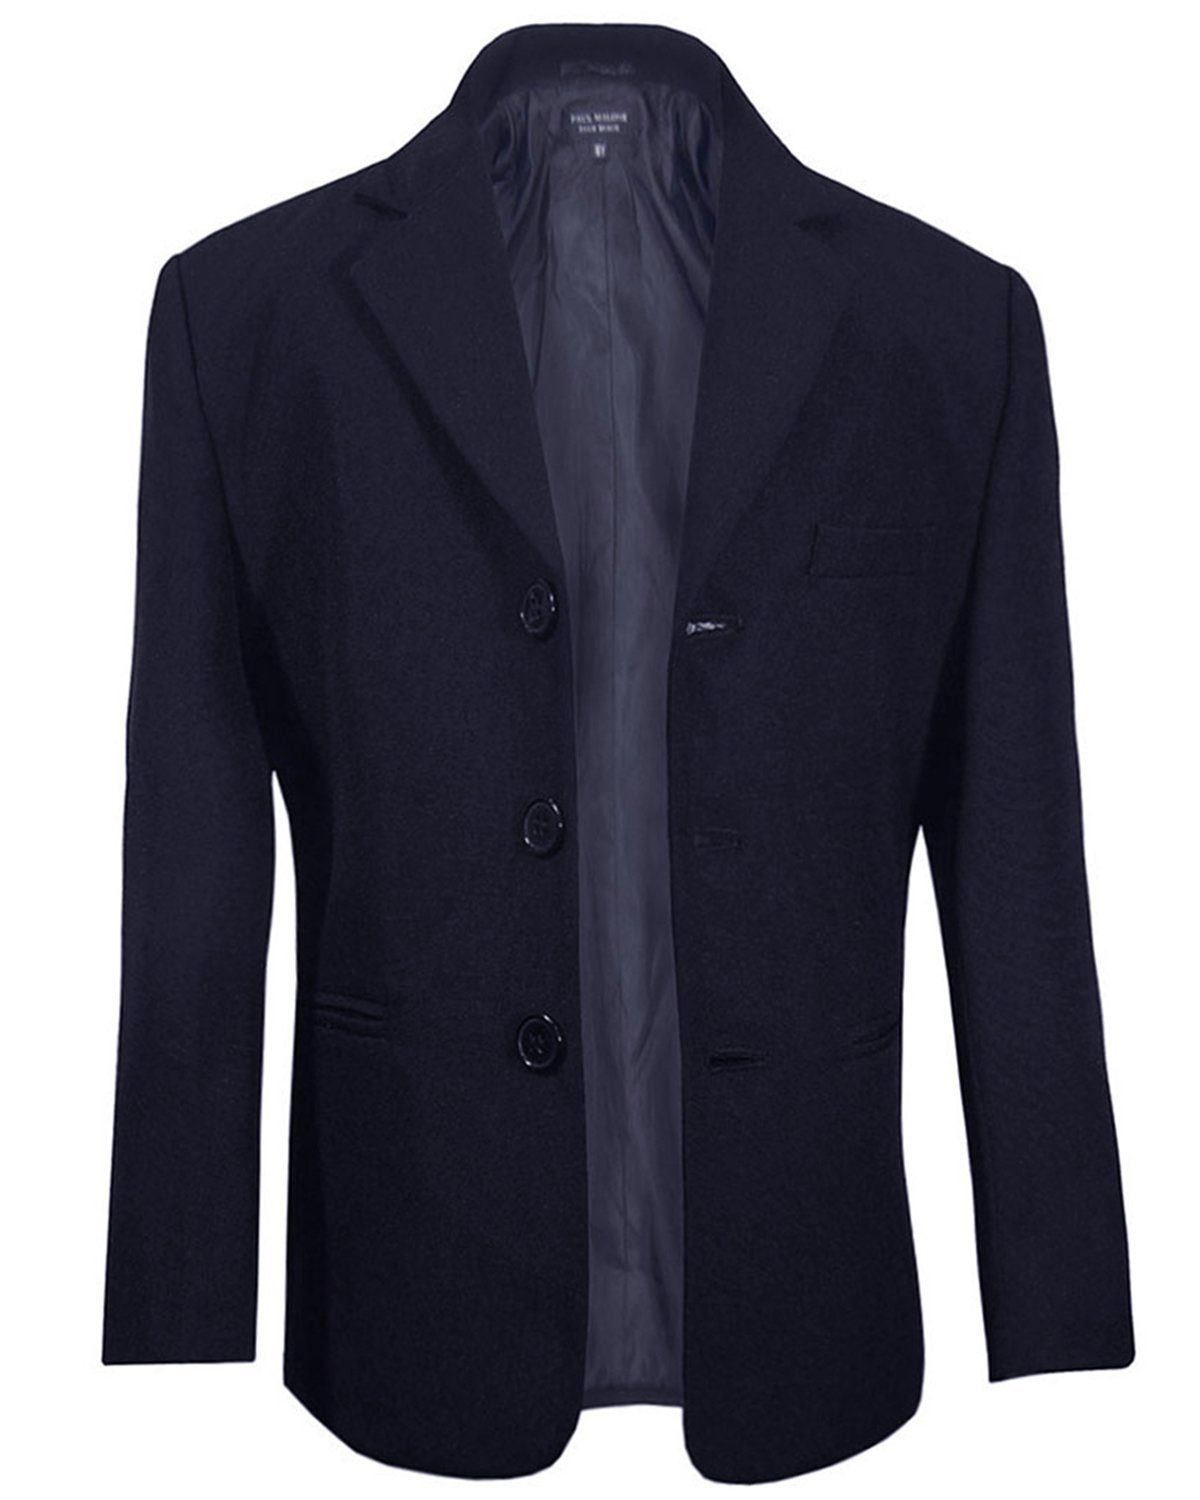 Paul Malone Anzugsakko Elegantes Kindersakko Anzugjacke Jackett für Jungen blau dunkelblau KA60, Gr. 92